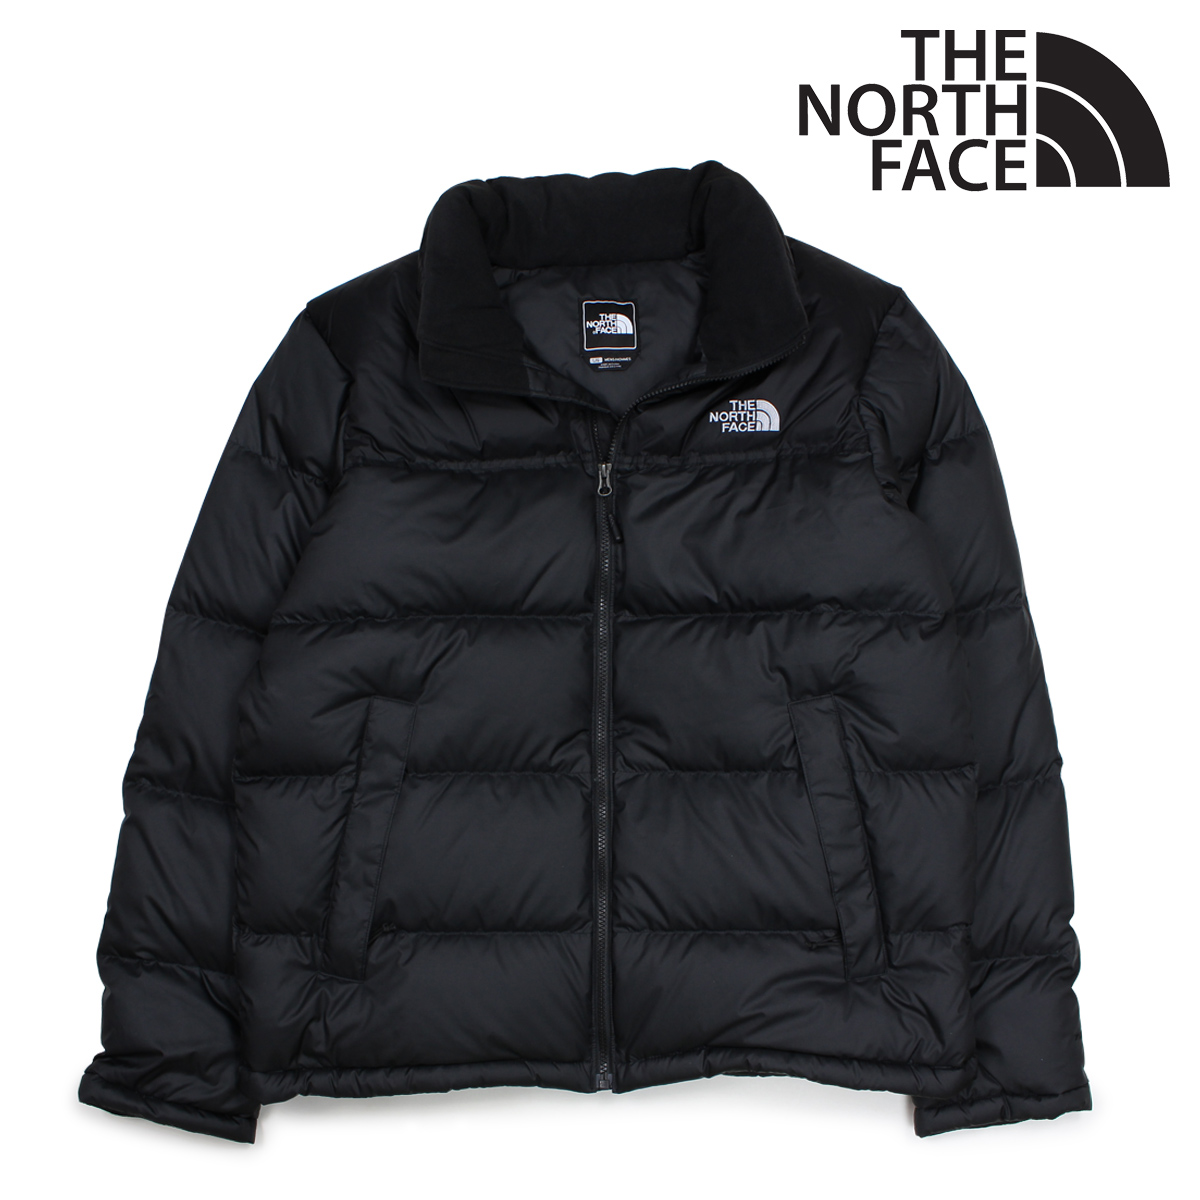 the north face black jacket mens